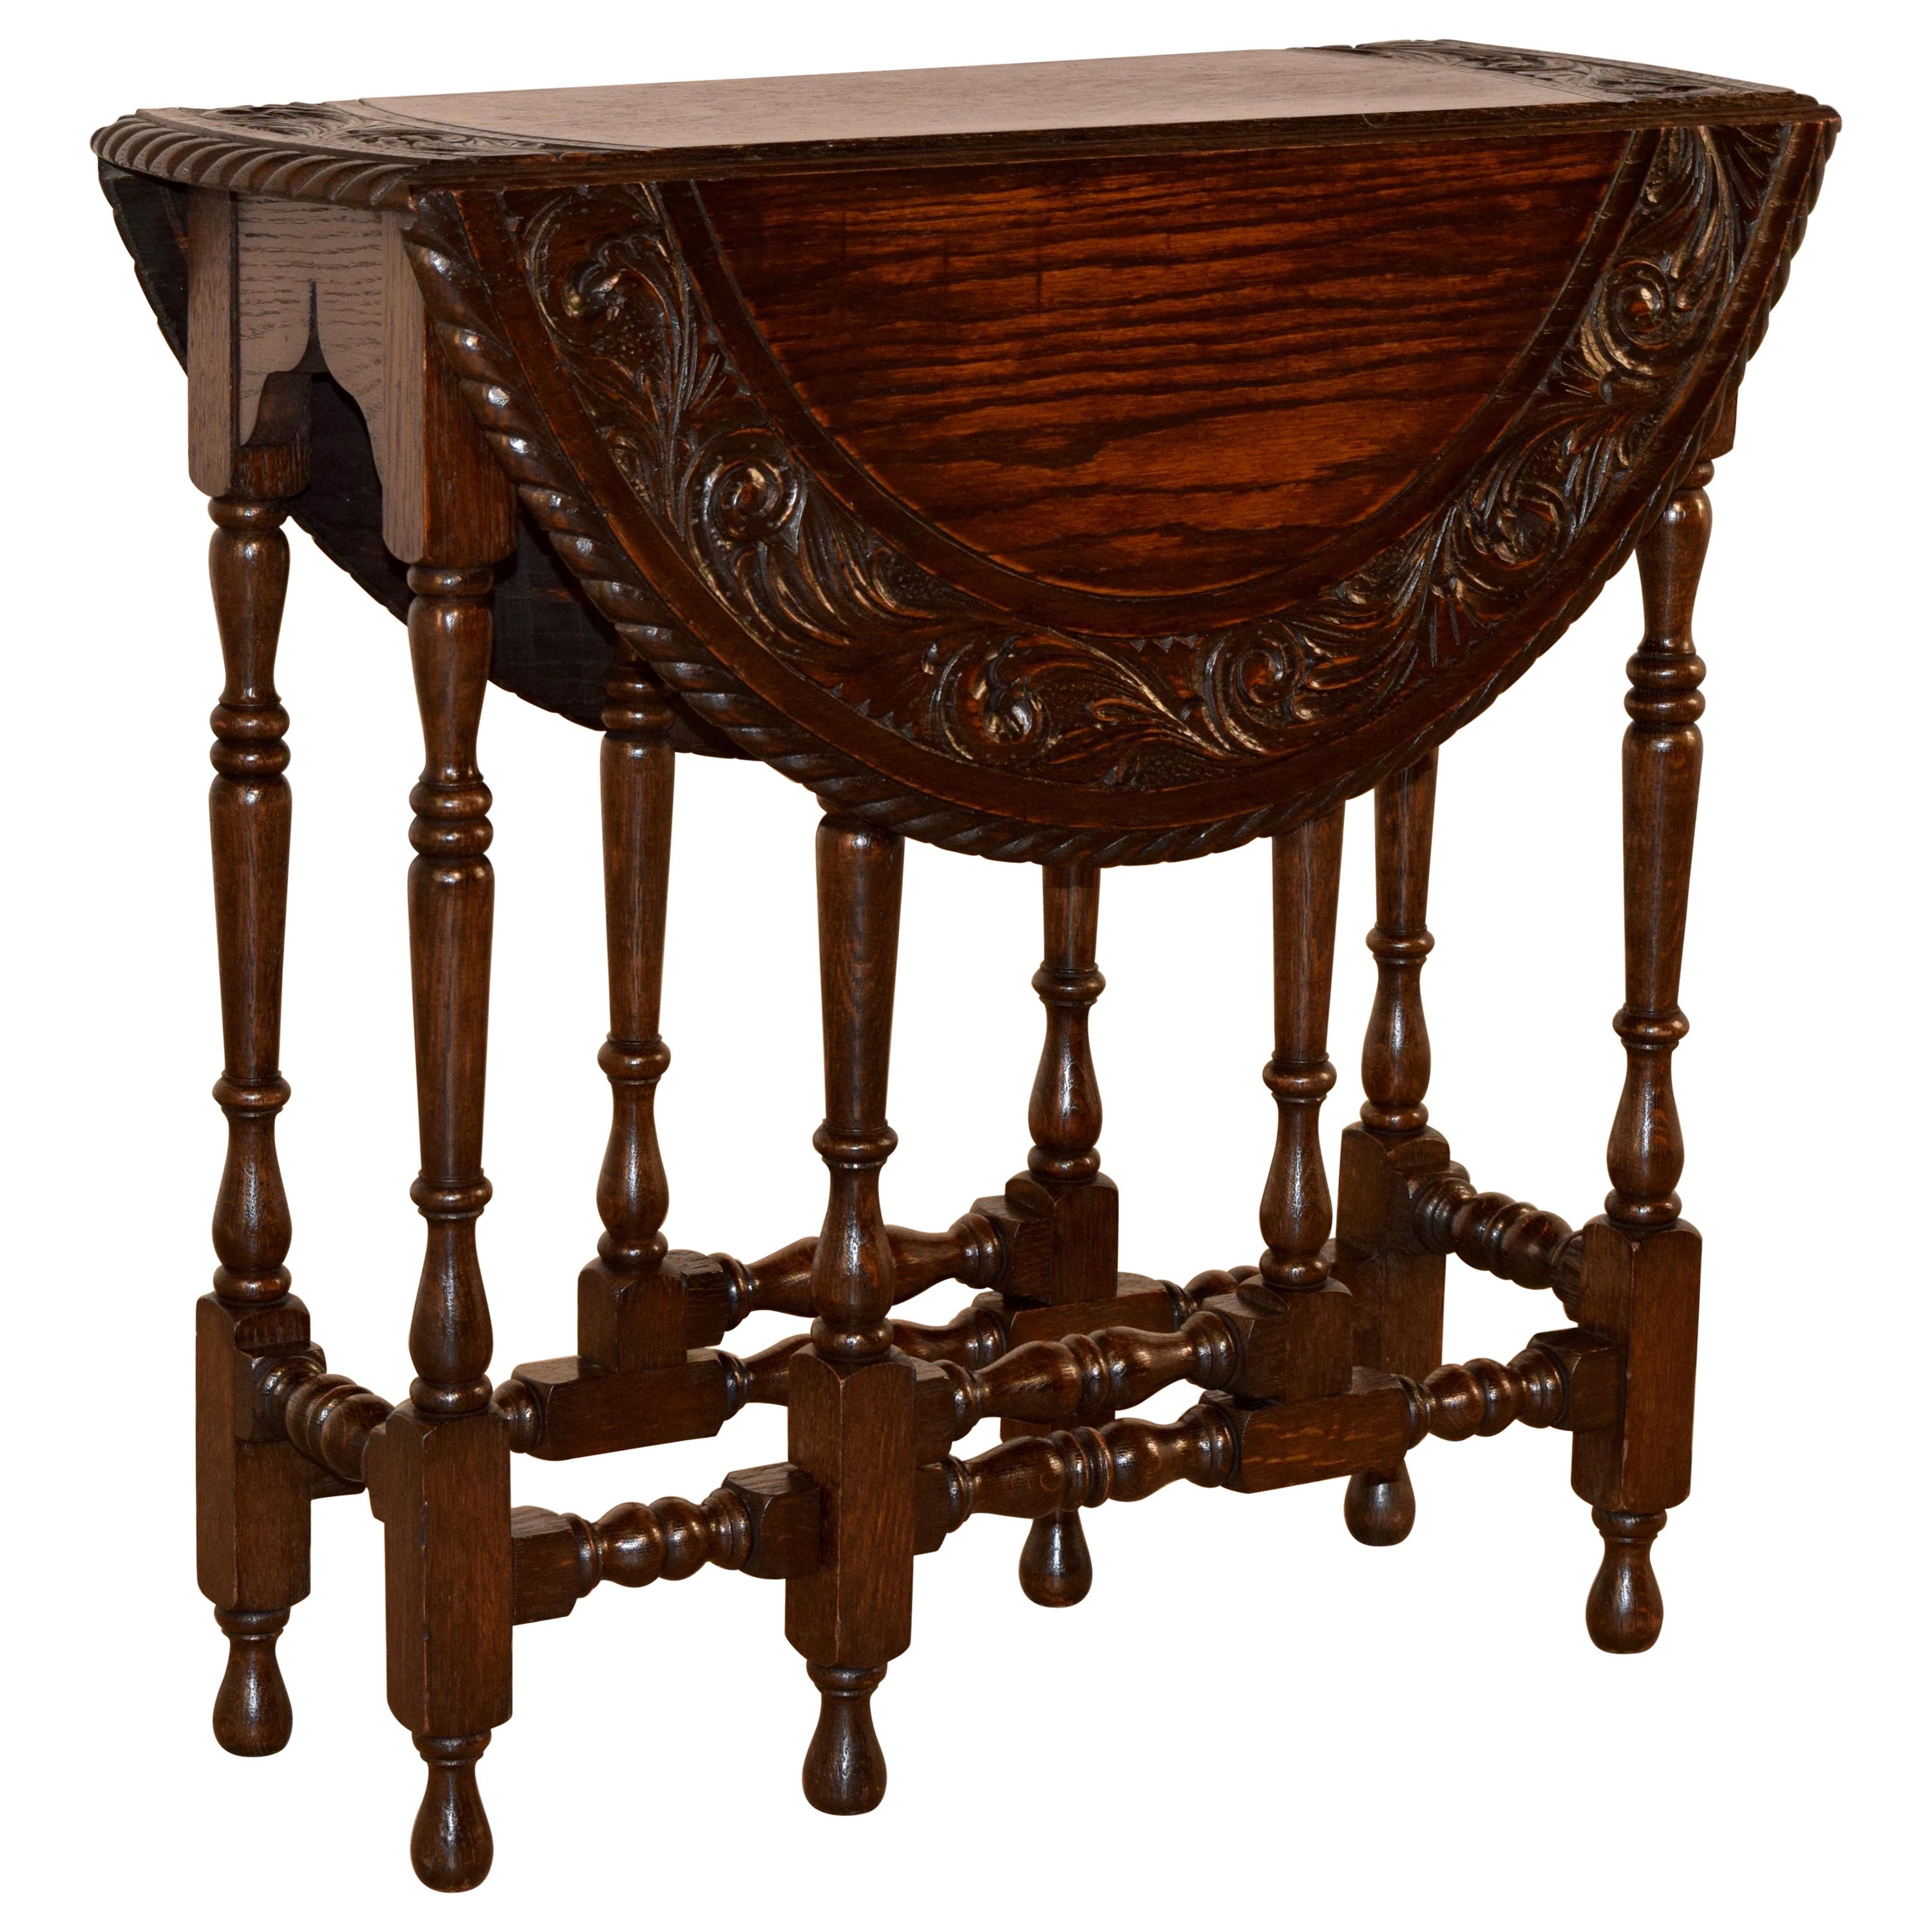 19th Century English Oak Carved Gate-Leg Table